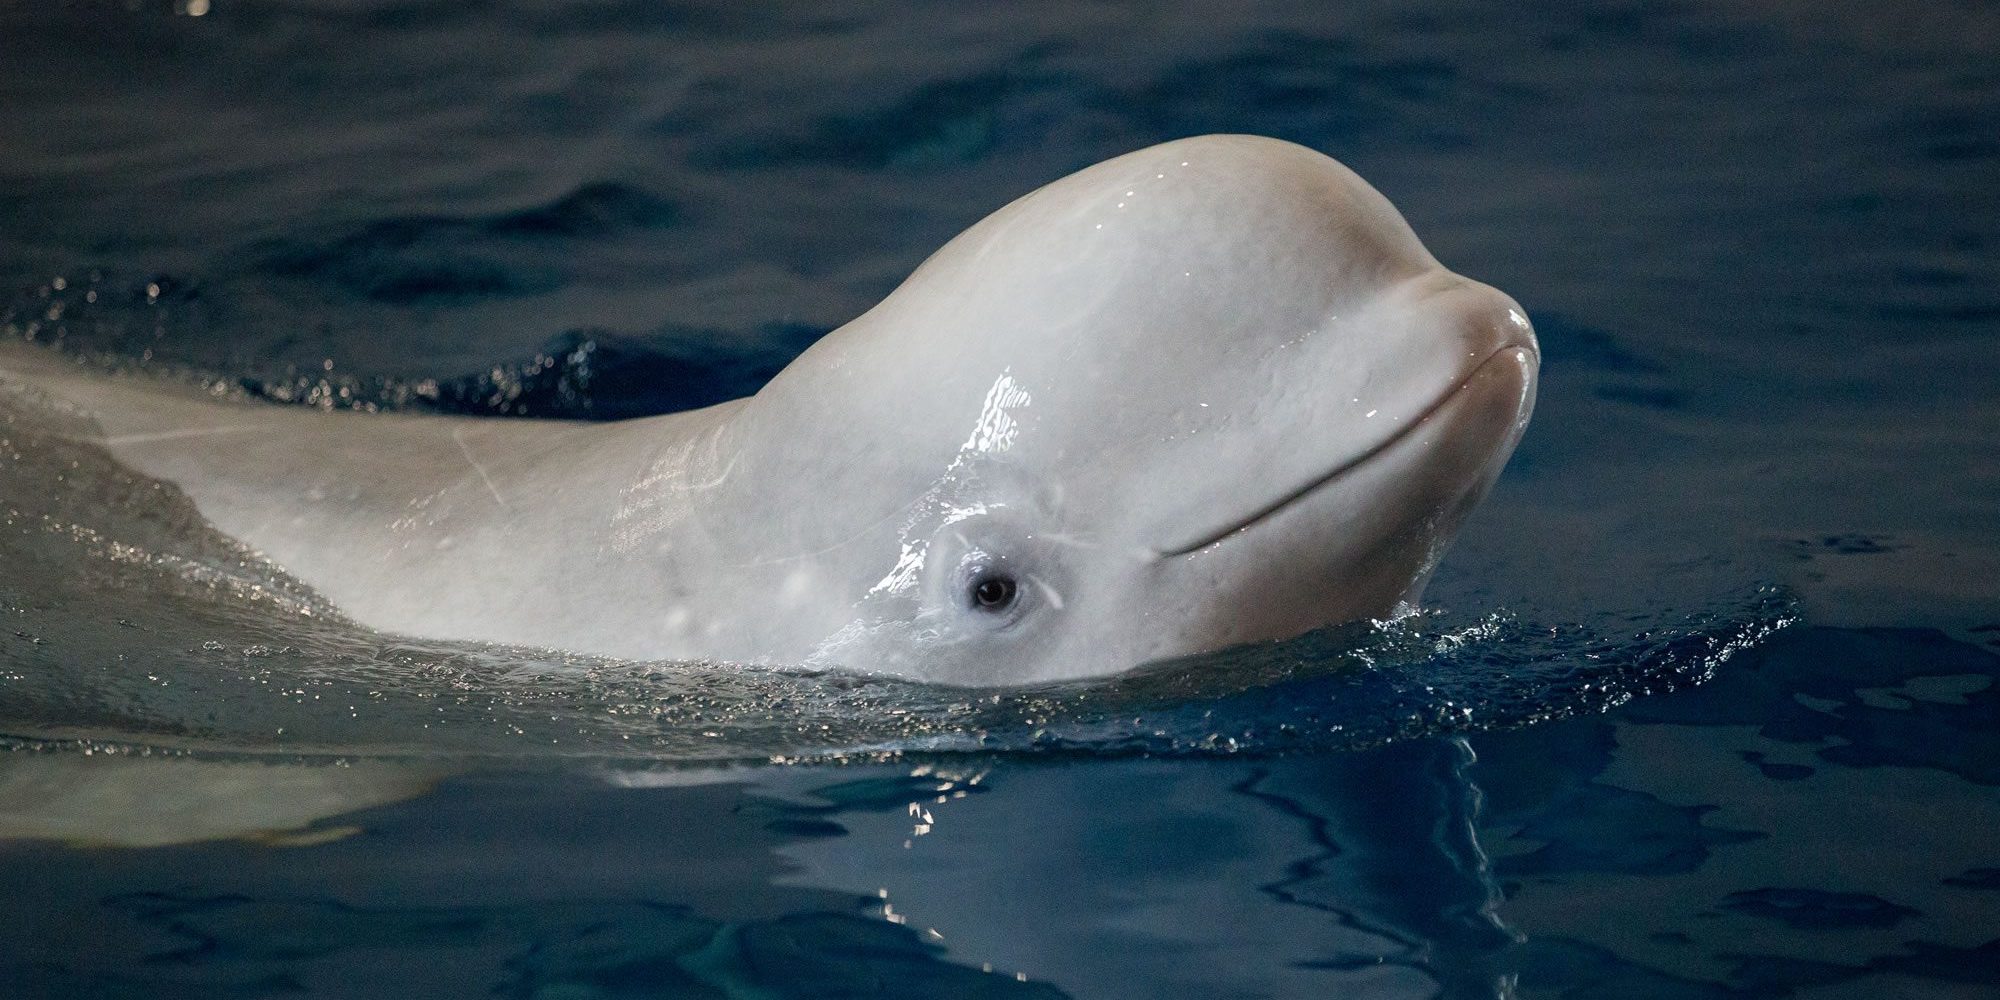 Beluga whale - Wikipedia